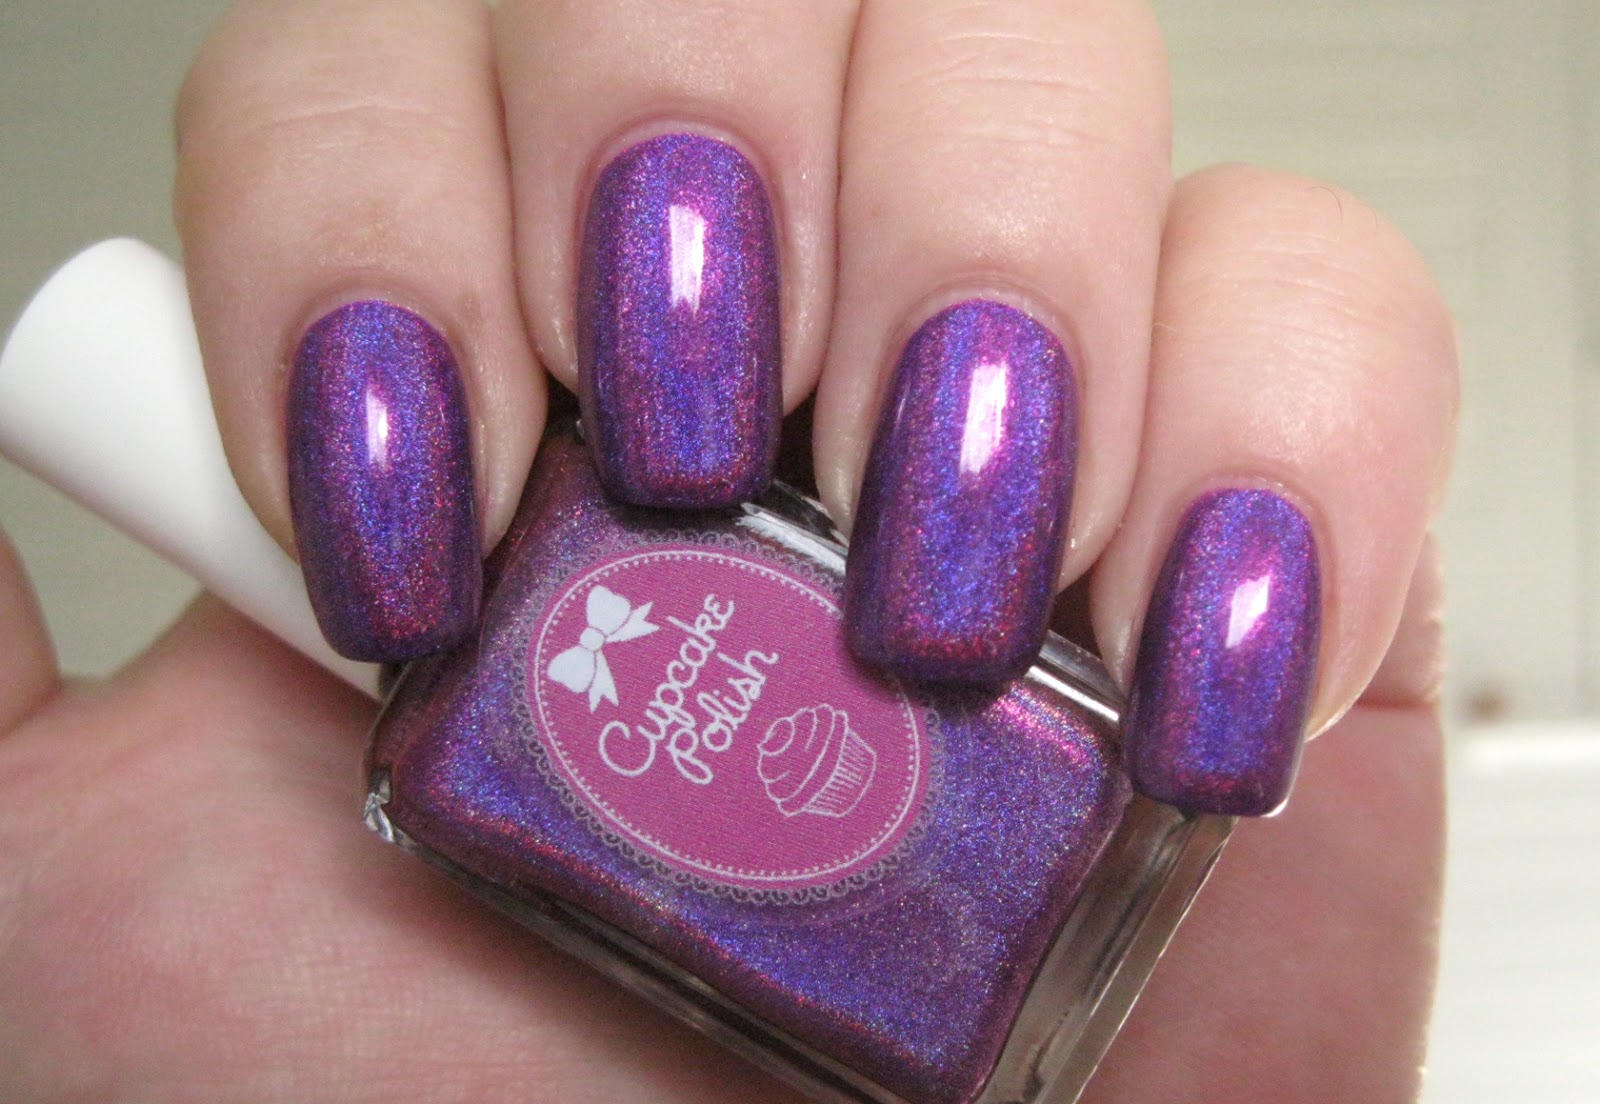 Amethyst - Dark Purple Glitter Holographic Nail Polish by Cupcake Polish